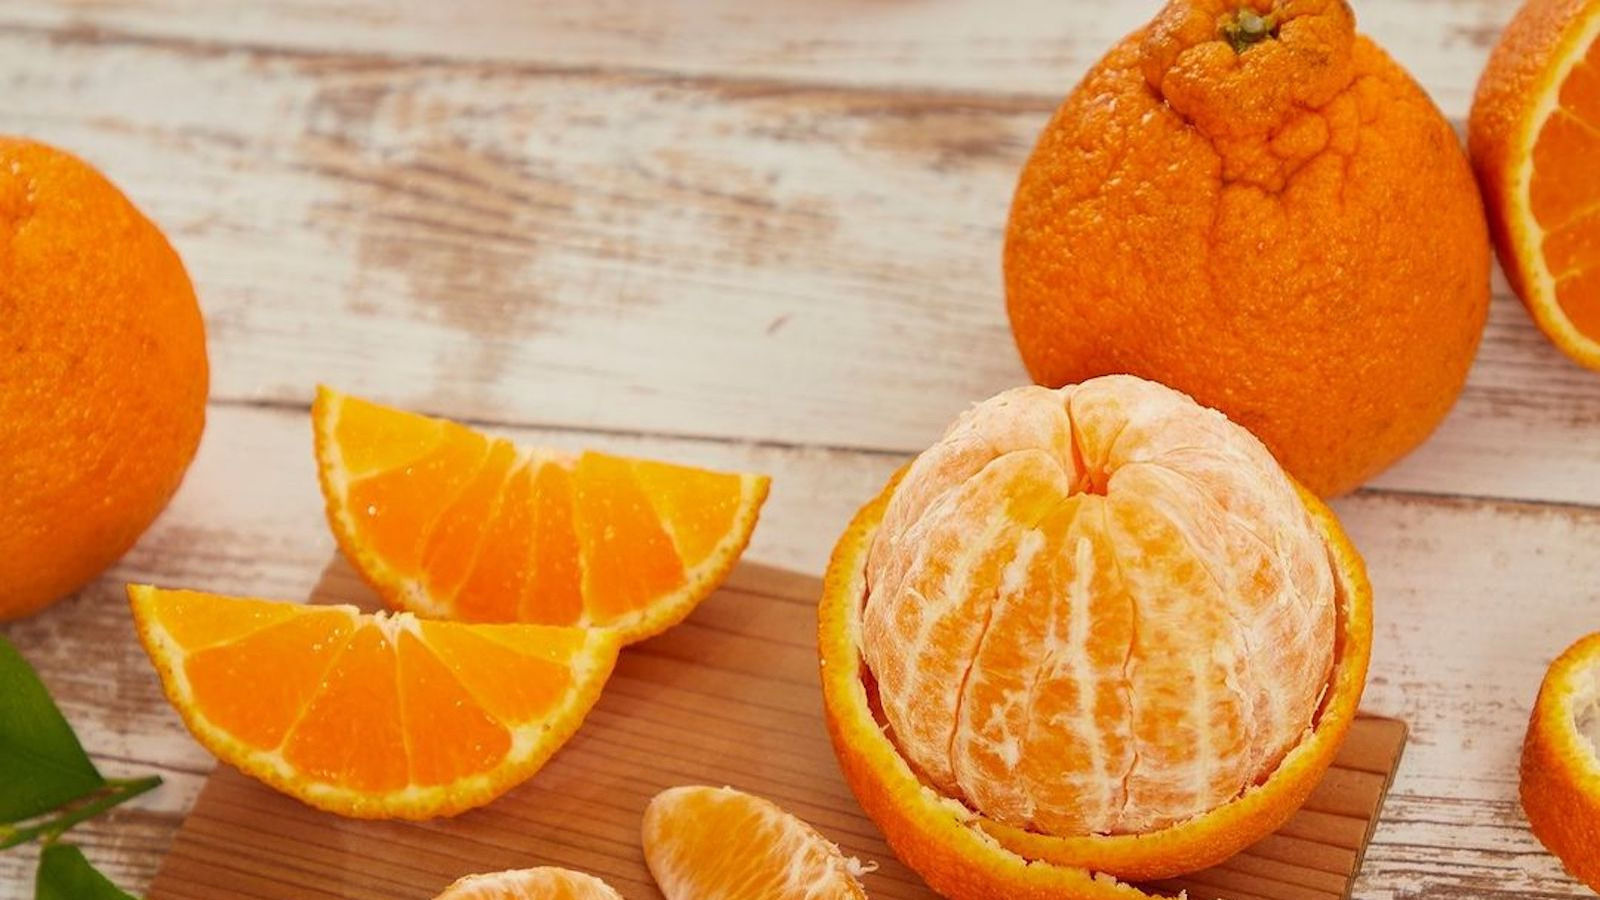 https://www.tastingtable.com/img/gallery/the-reason-sumo-citrus-oranges-are-so-expensive/l-intro-1678381516.jpg